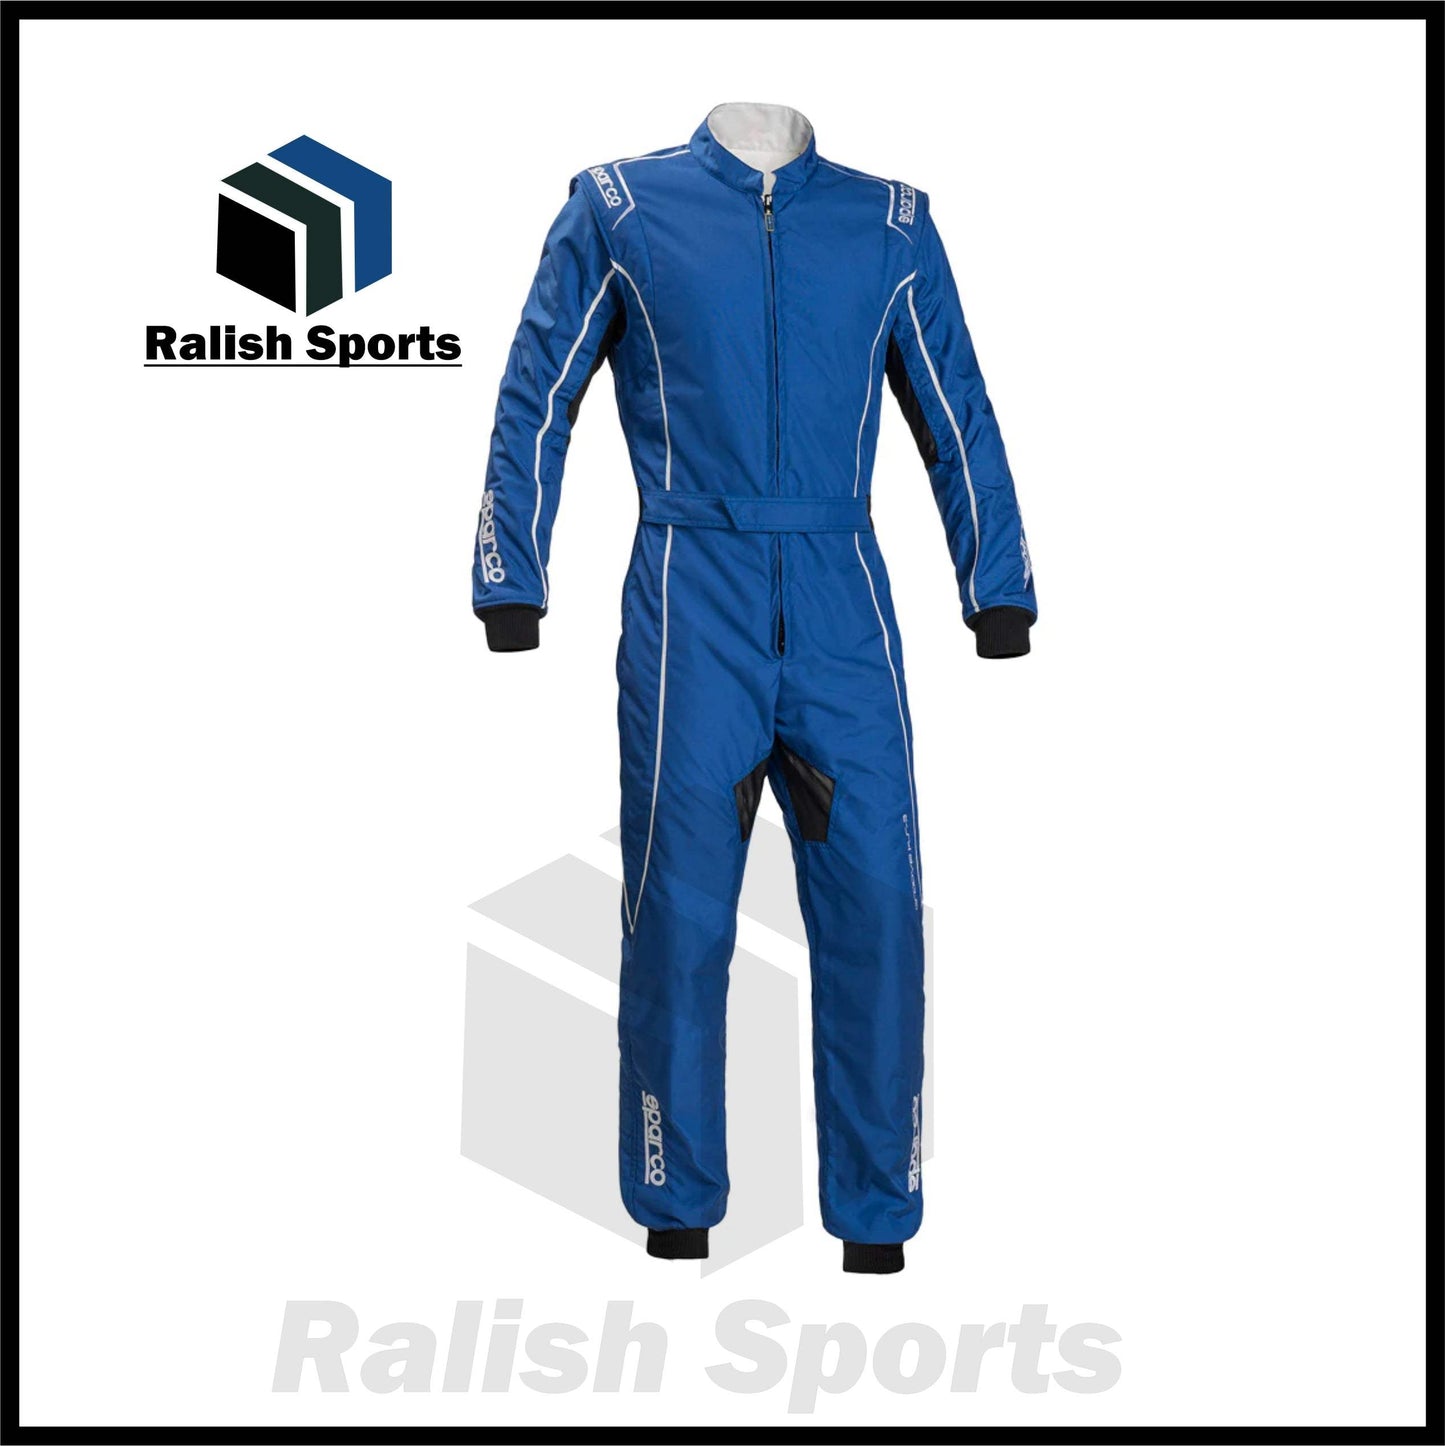 SPARCO KS ART Racing Suit - Ralish Sports